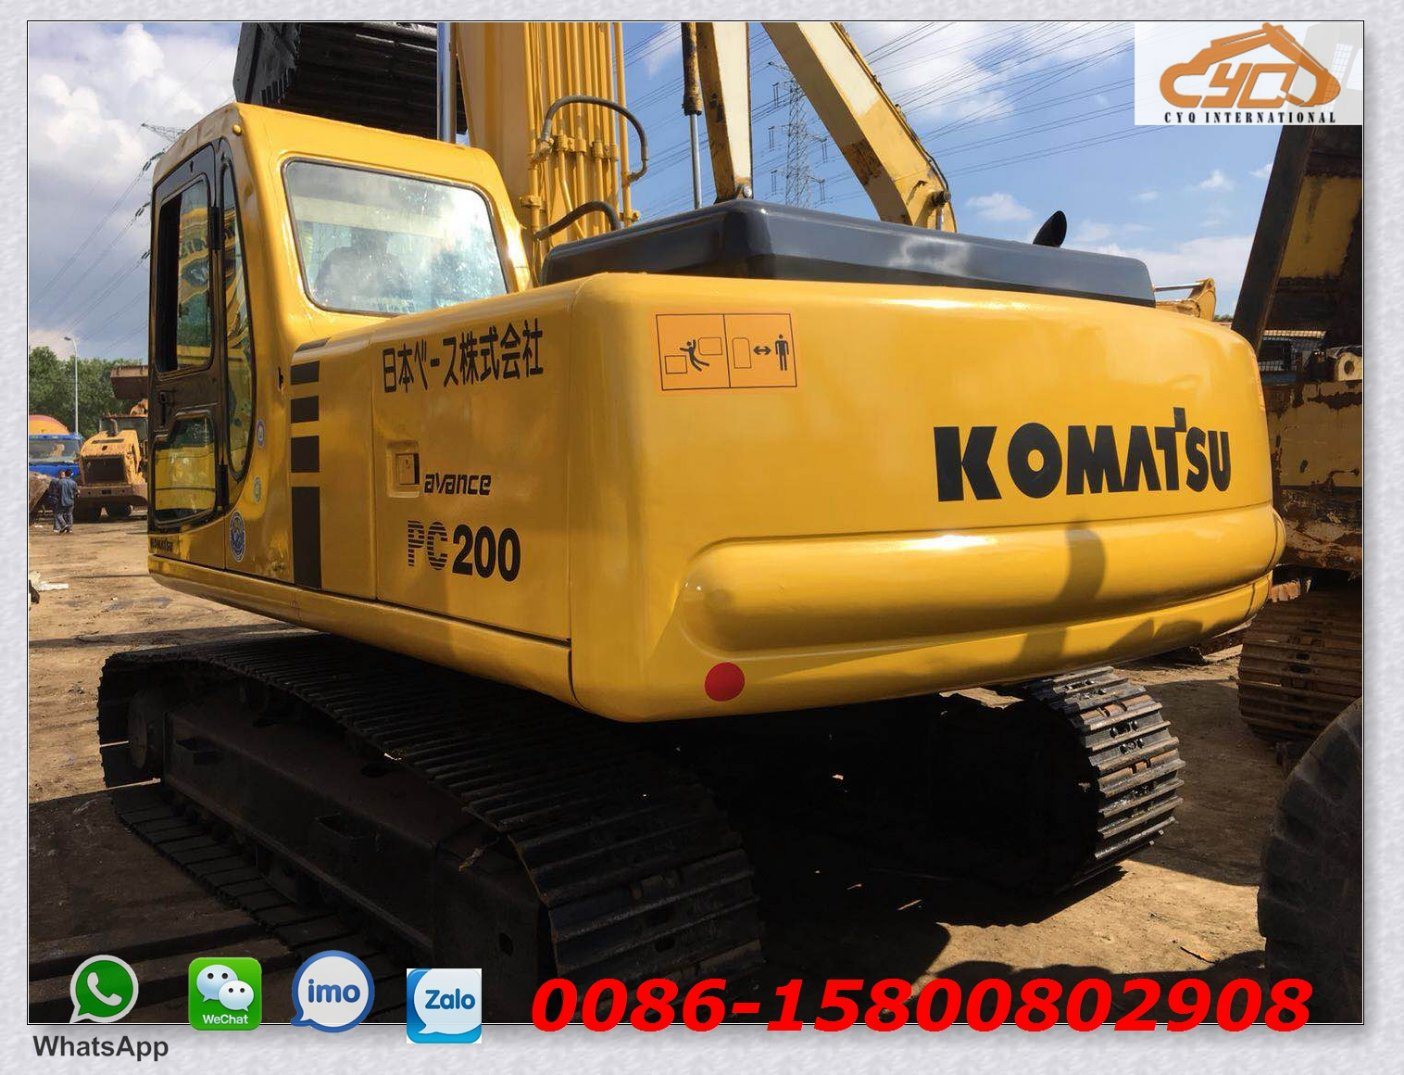 China Supplier of Used Excavator Komatsu PC200-6 Excavators for Sale